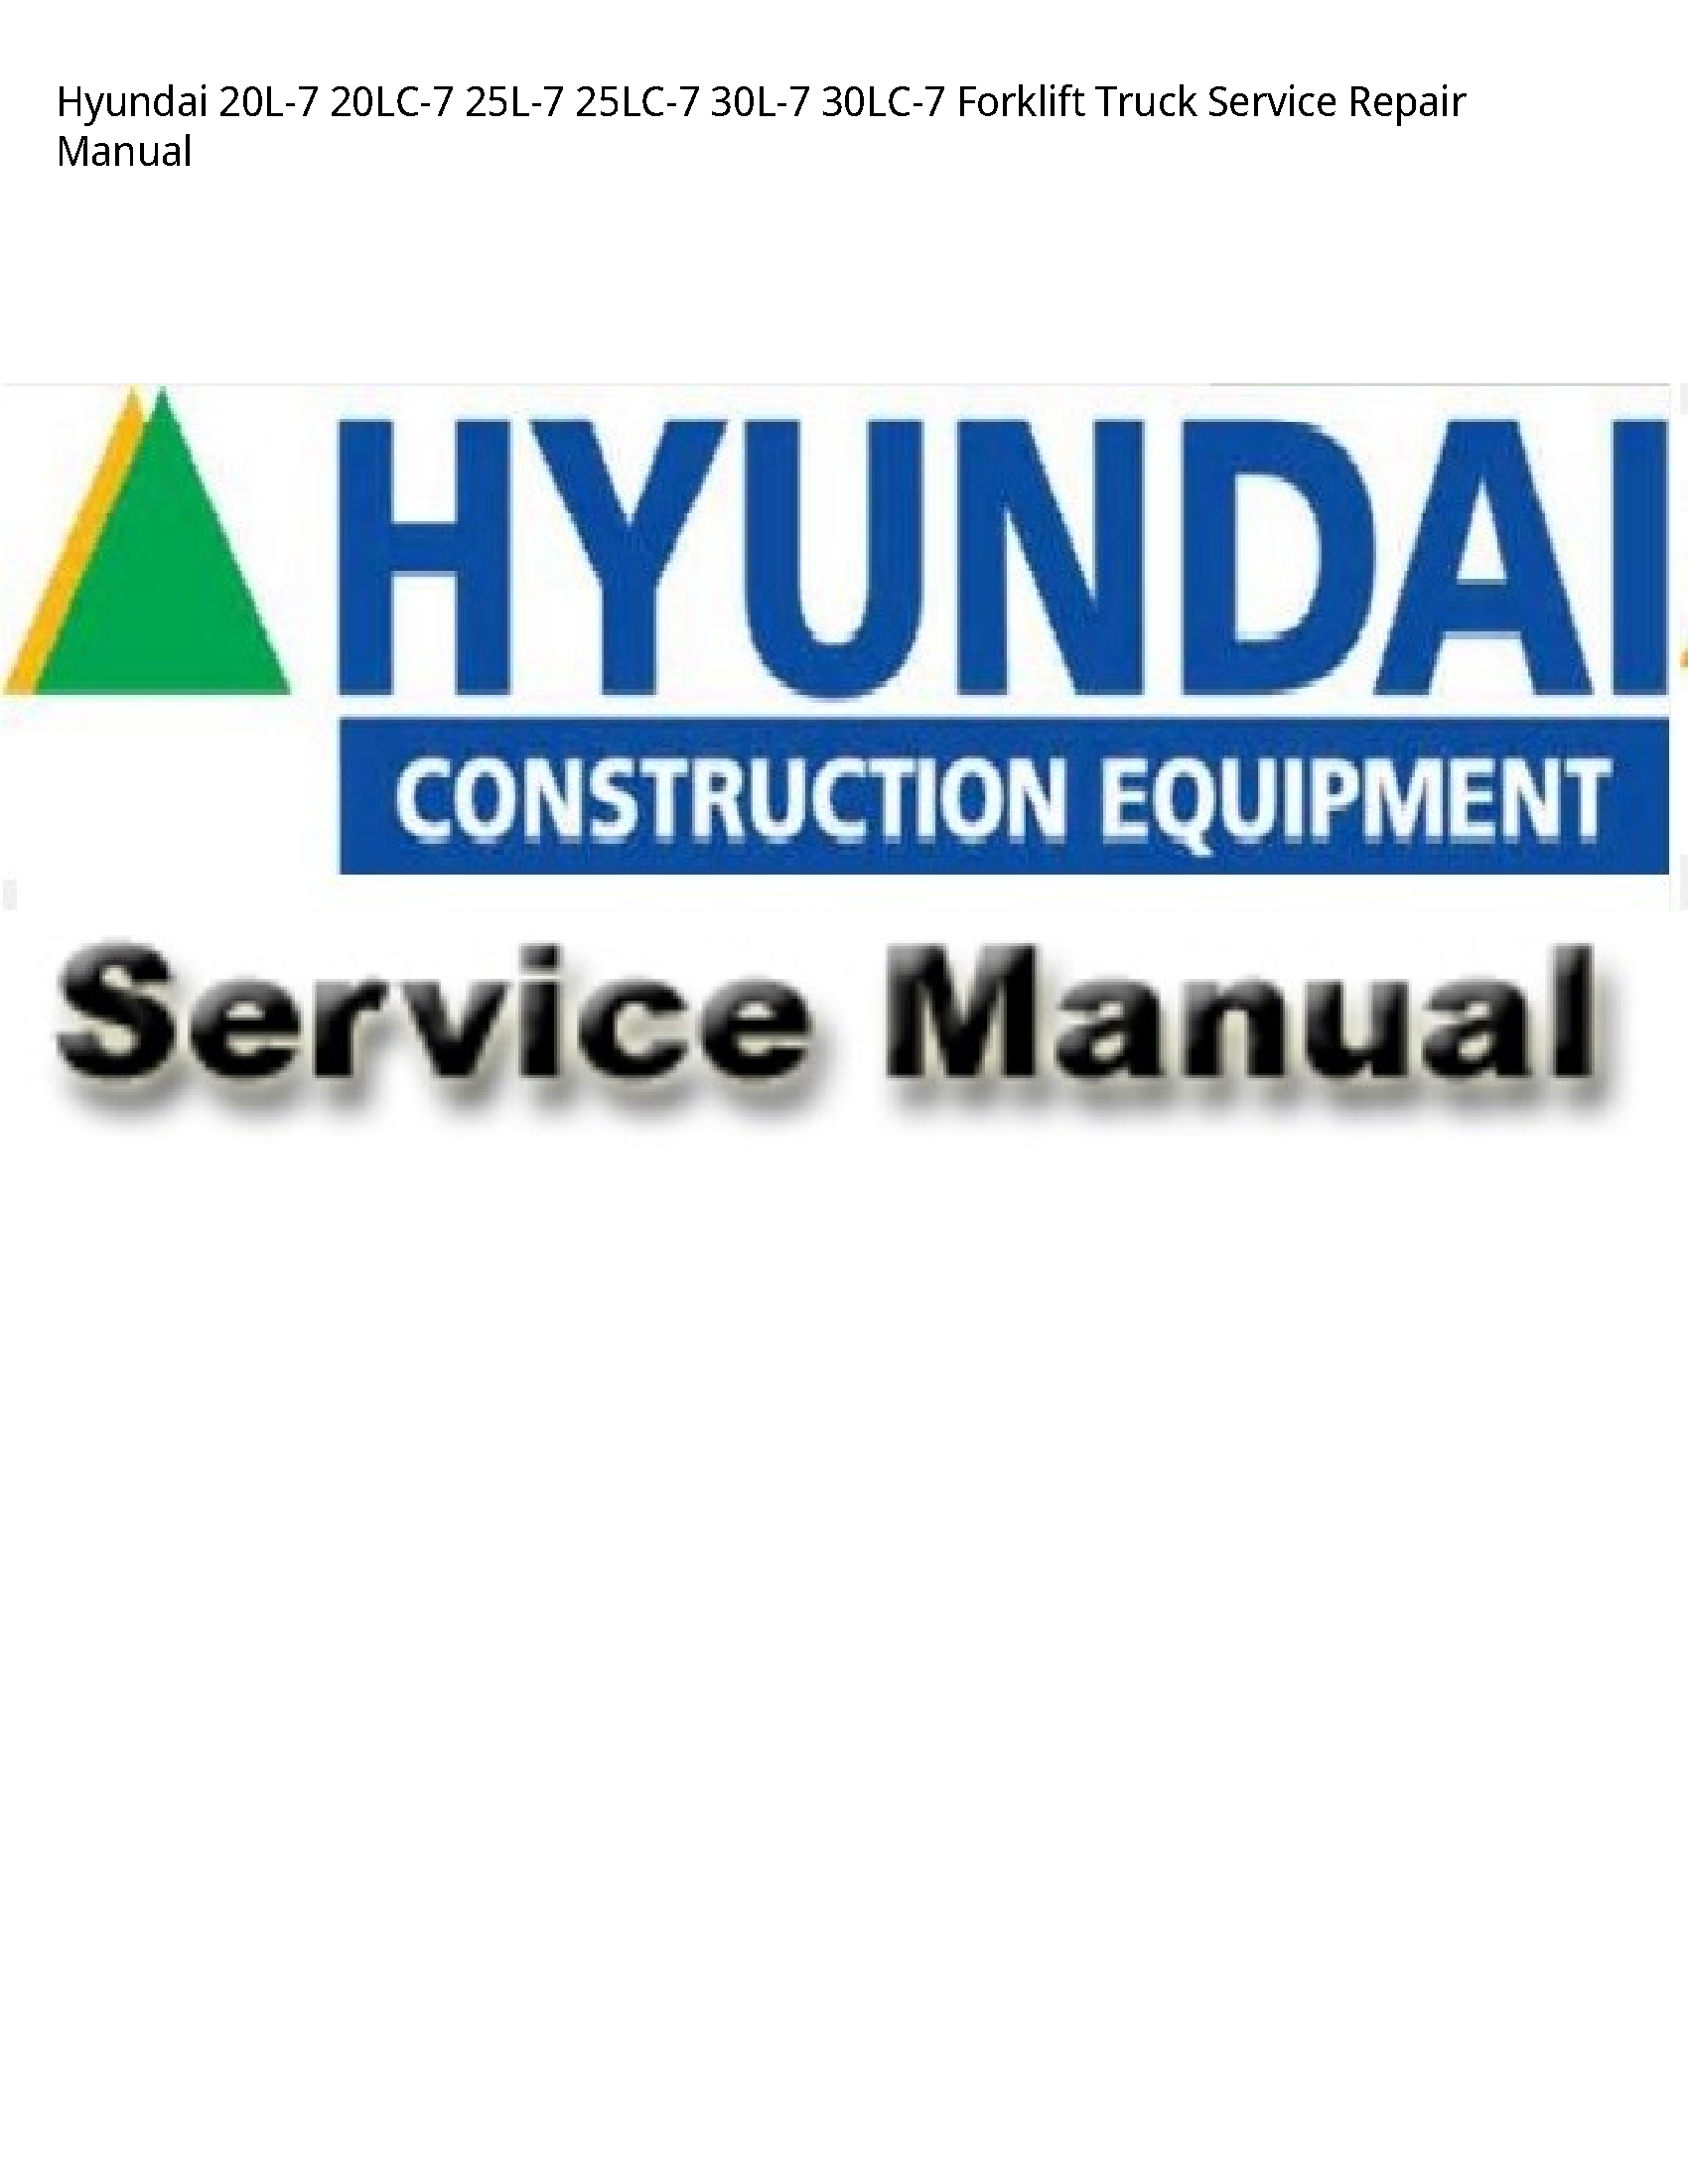 Hyundai 20L-7 Forklift Truck manual